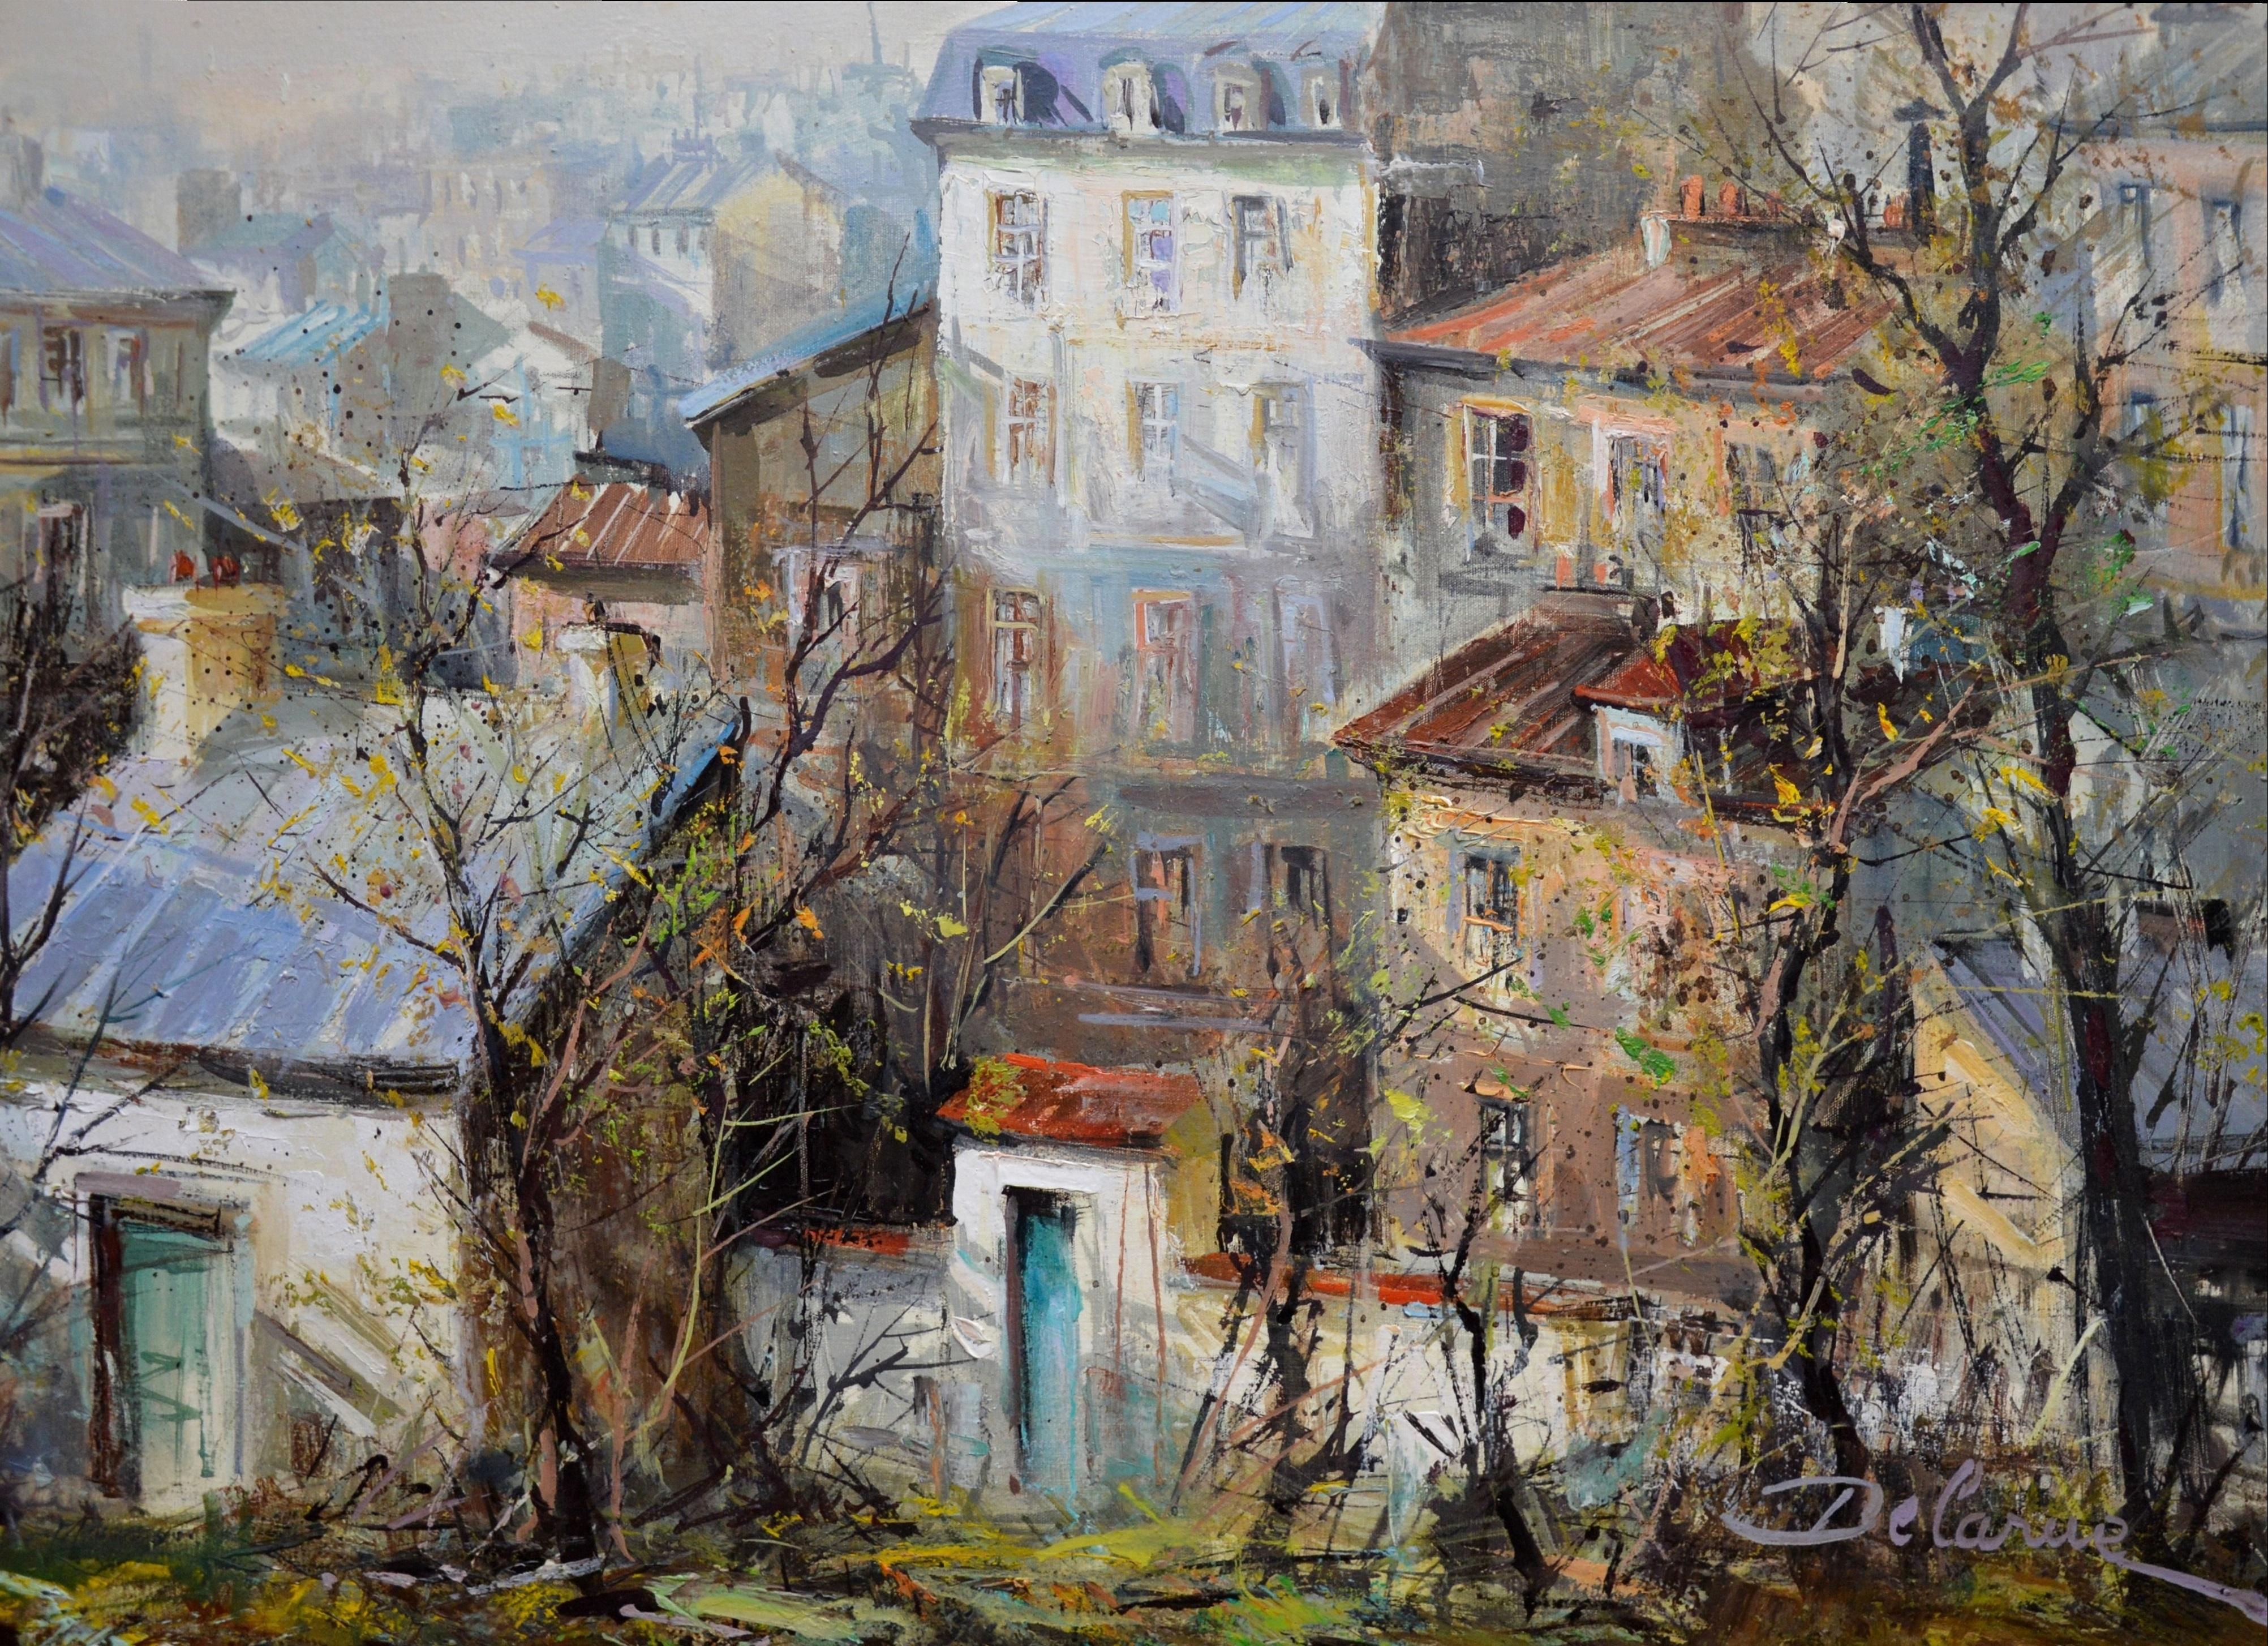 Soleil tot le Matin, Montmartre - French Post Impressionist Oil Painting Paris 1